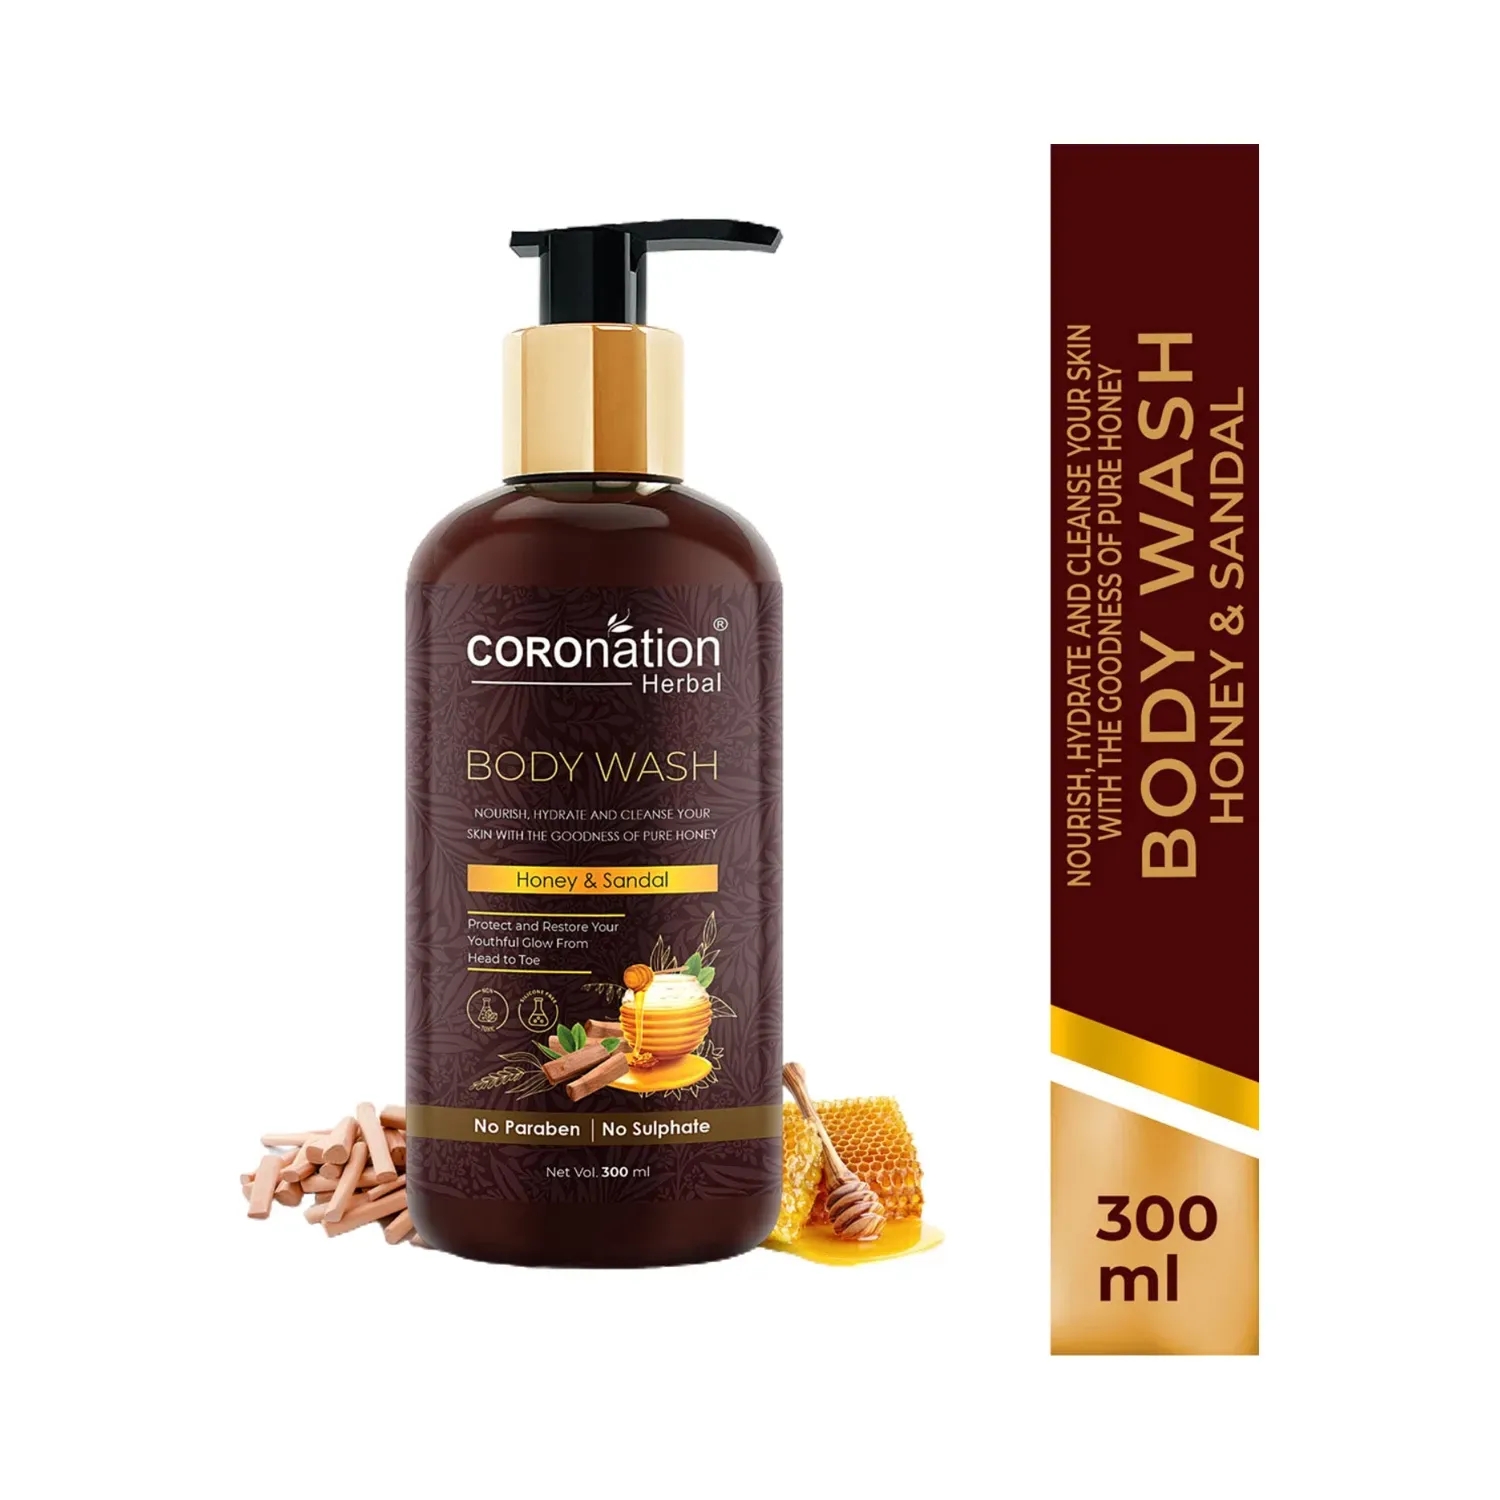 COROnation Herbal | COROnation Herbal Honey & Sandal Body Wash (300ml)